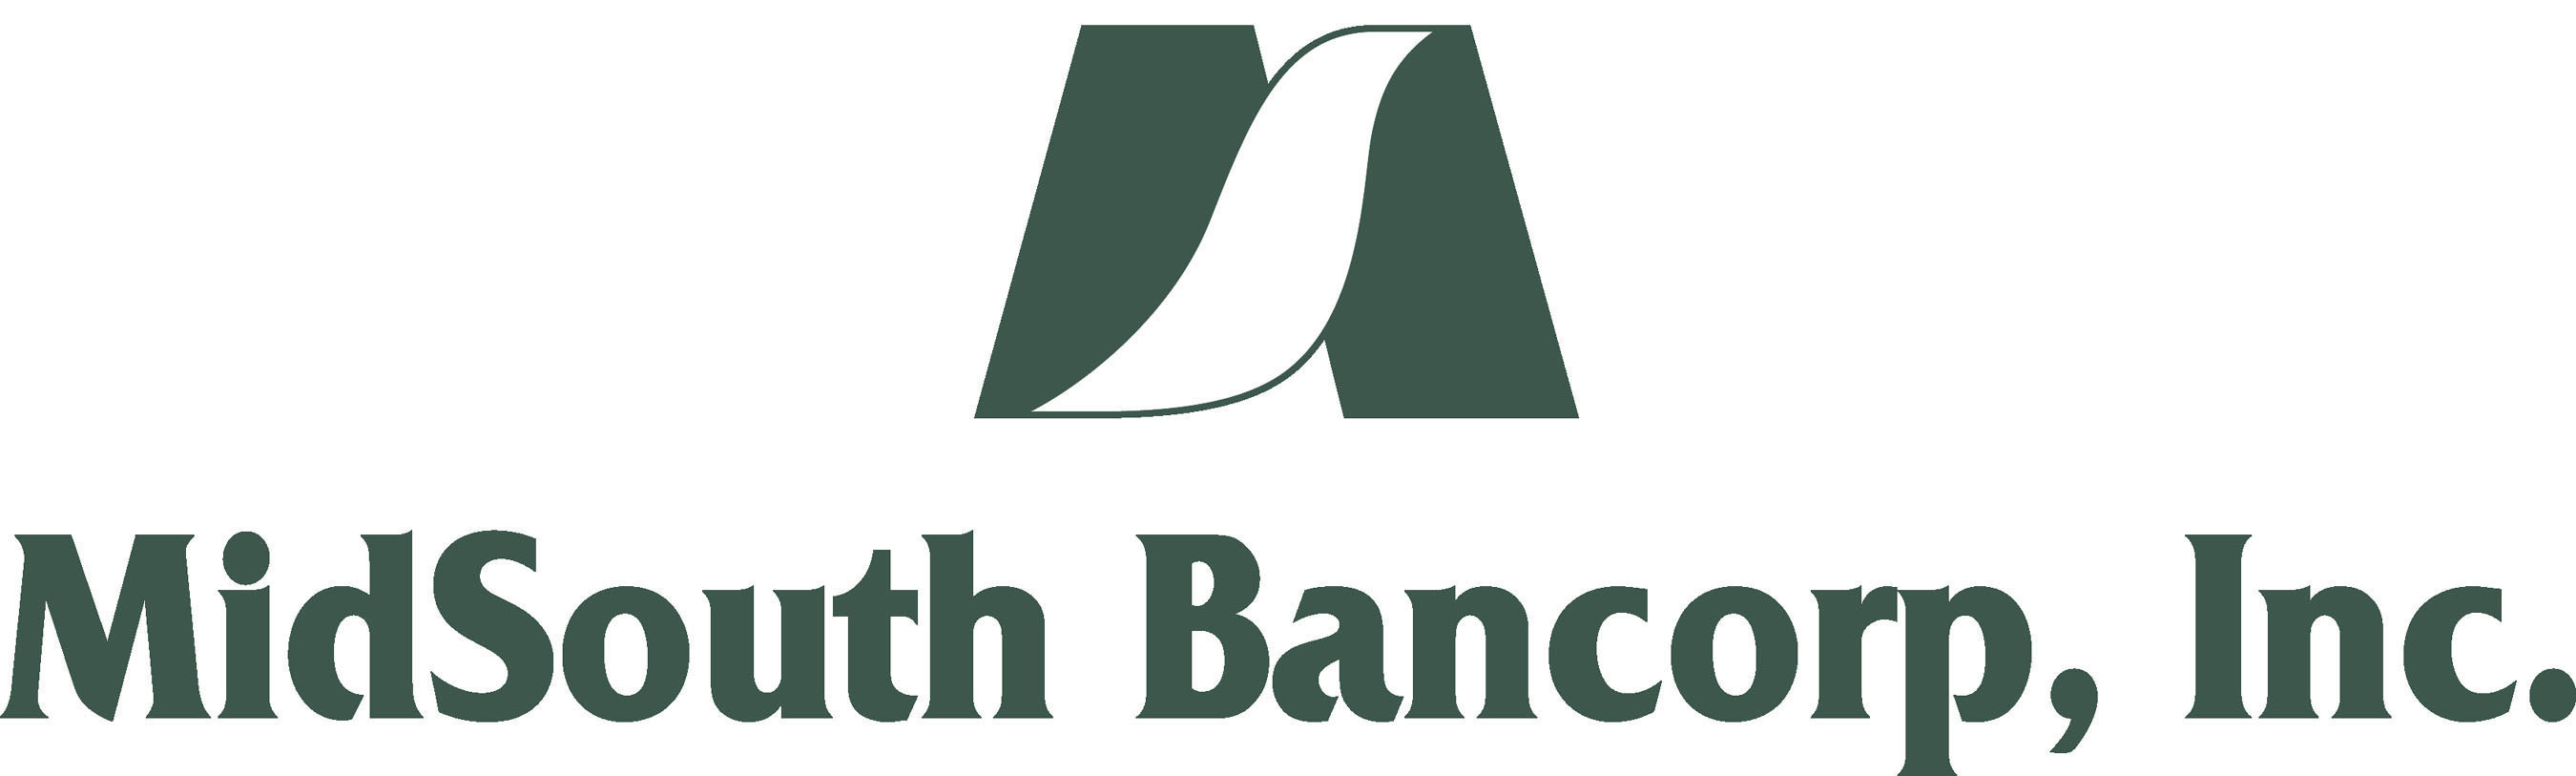 MidSouth Bancorp, Inc. Logo.